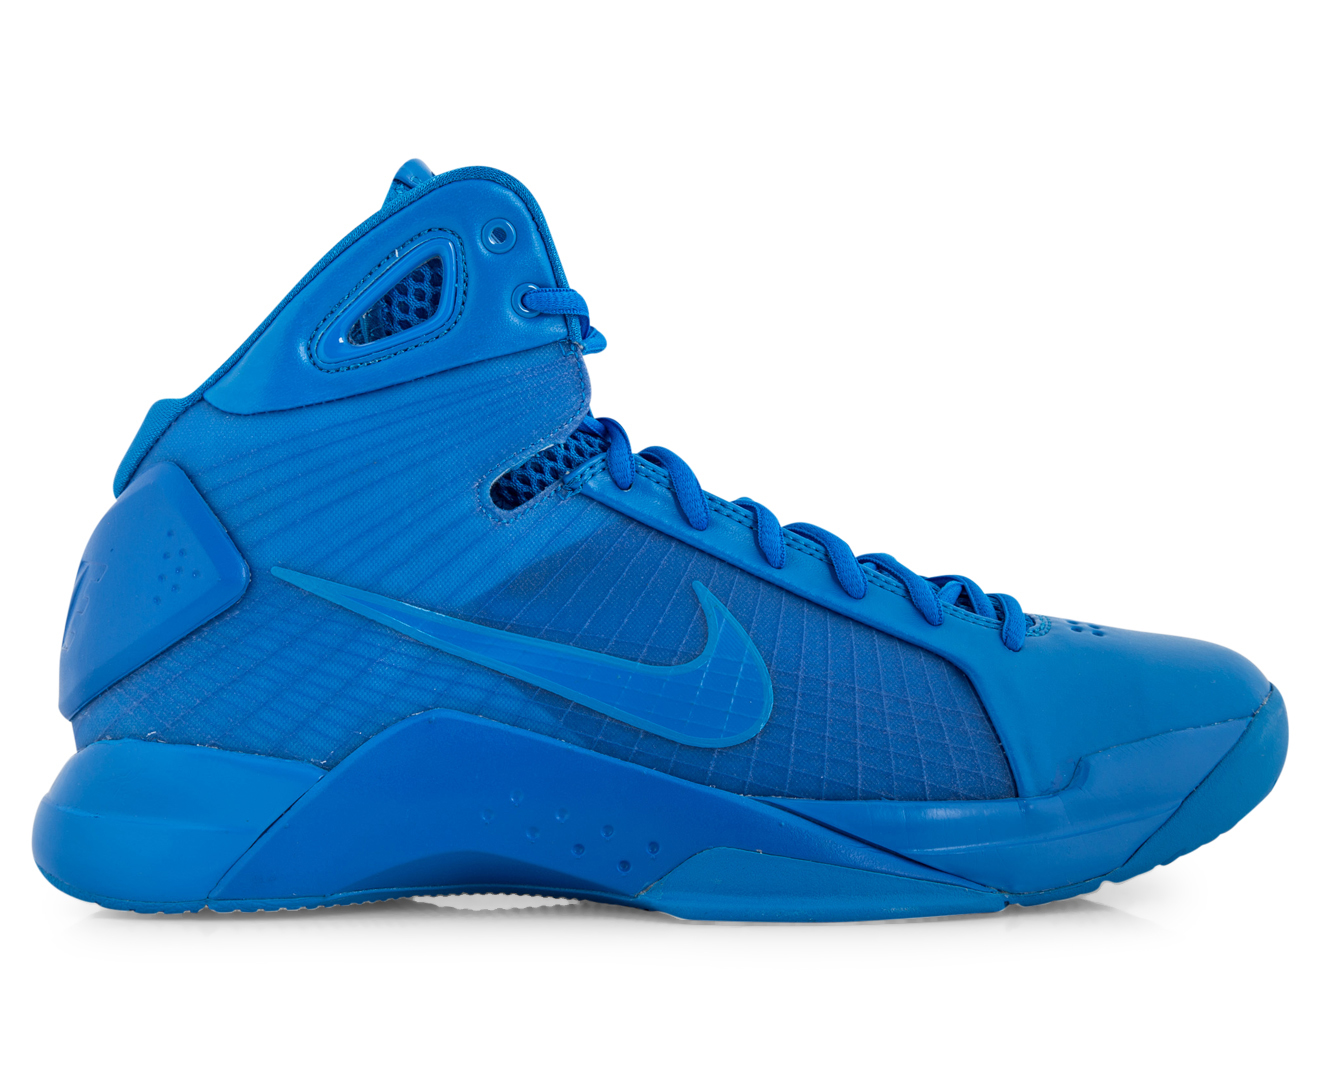 Nike Men's Hyperdunk 08 Basketball Shoe - Blue | Catch.com.au